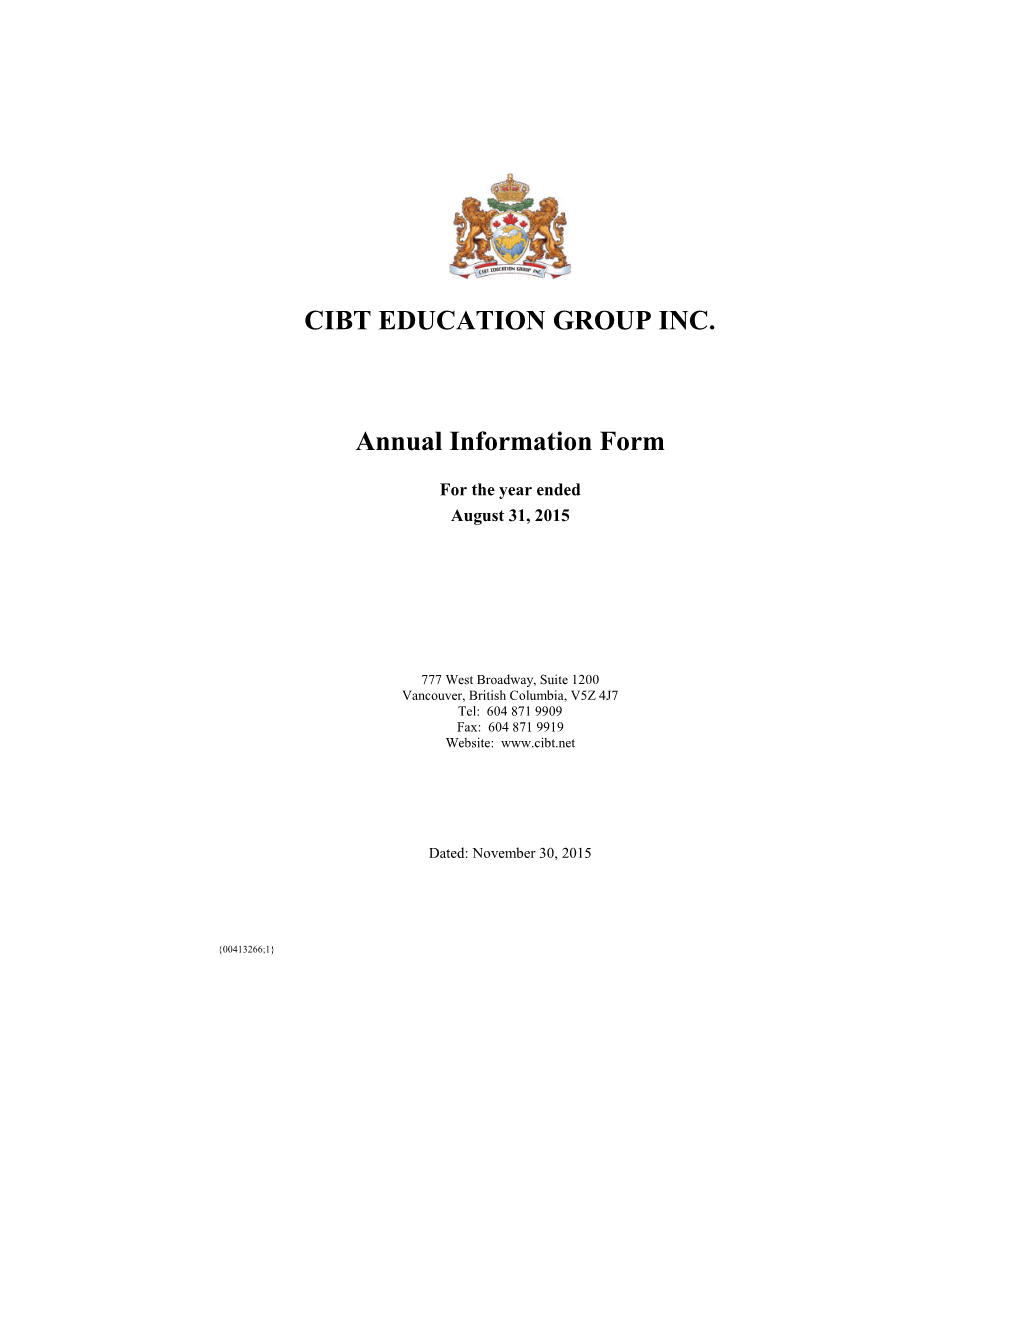 CIBT EDUCATION GROUP INC. Annual Information Form